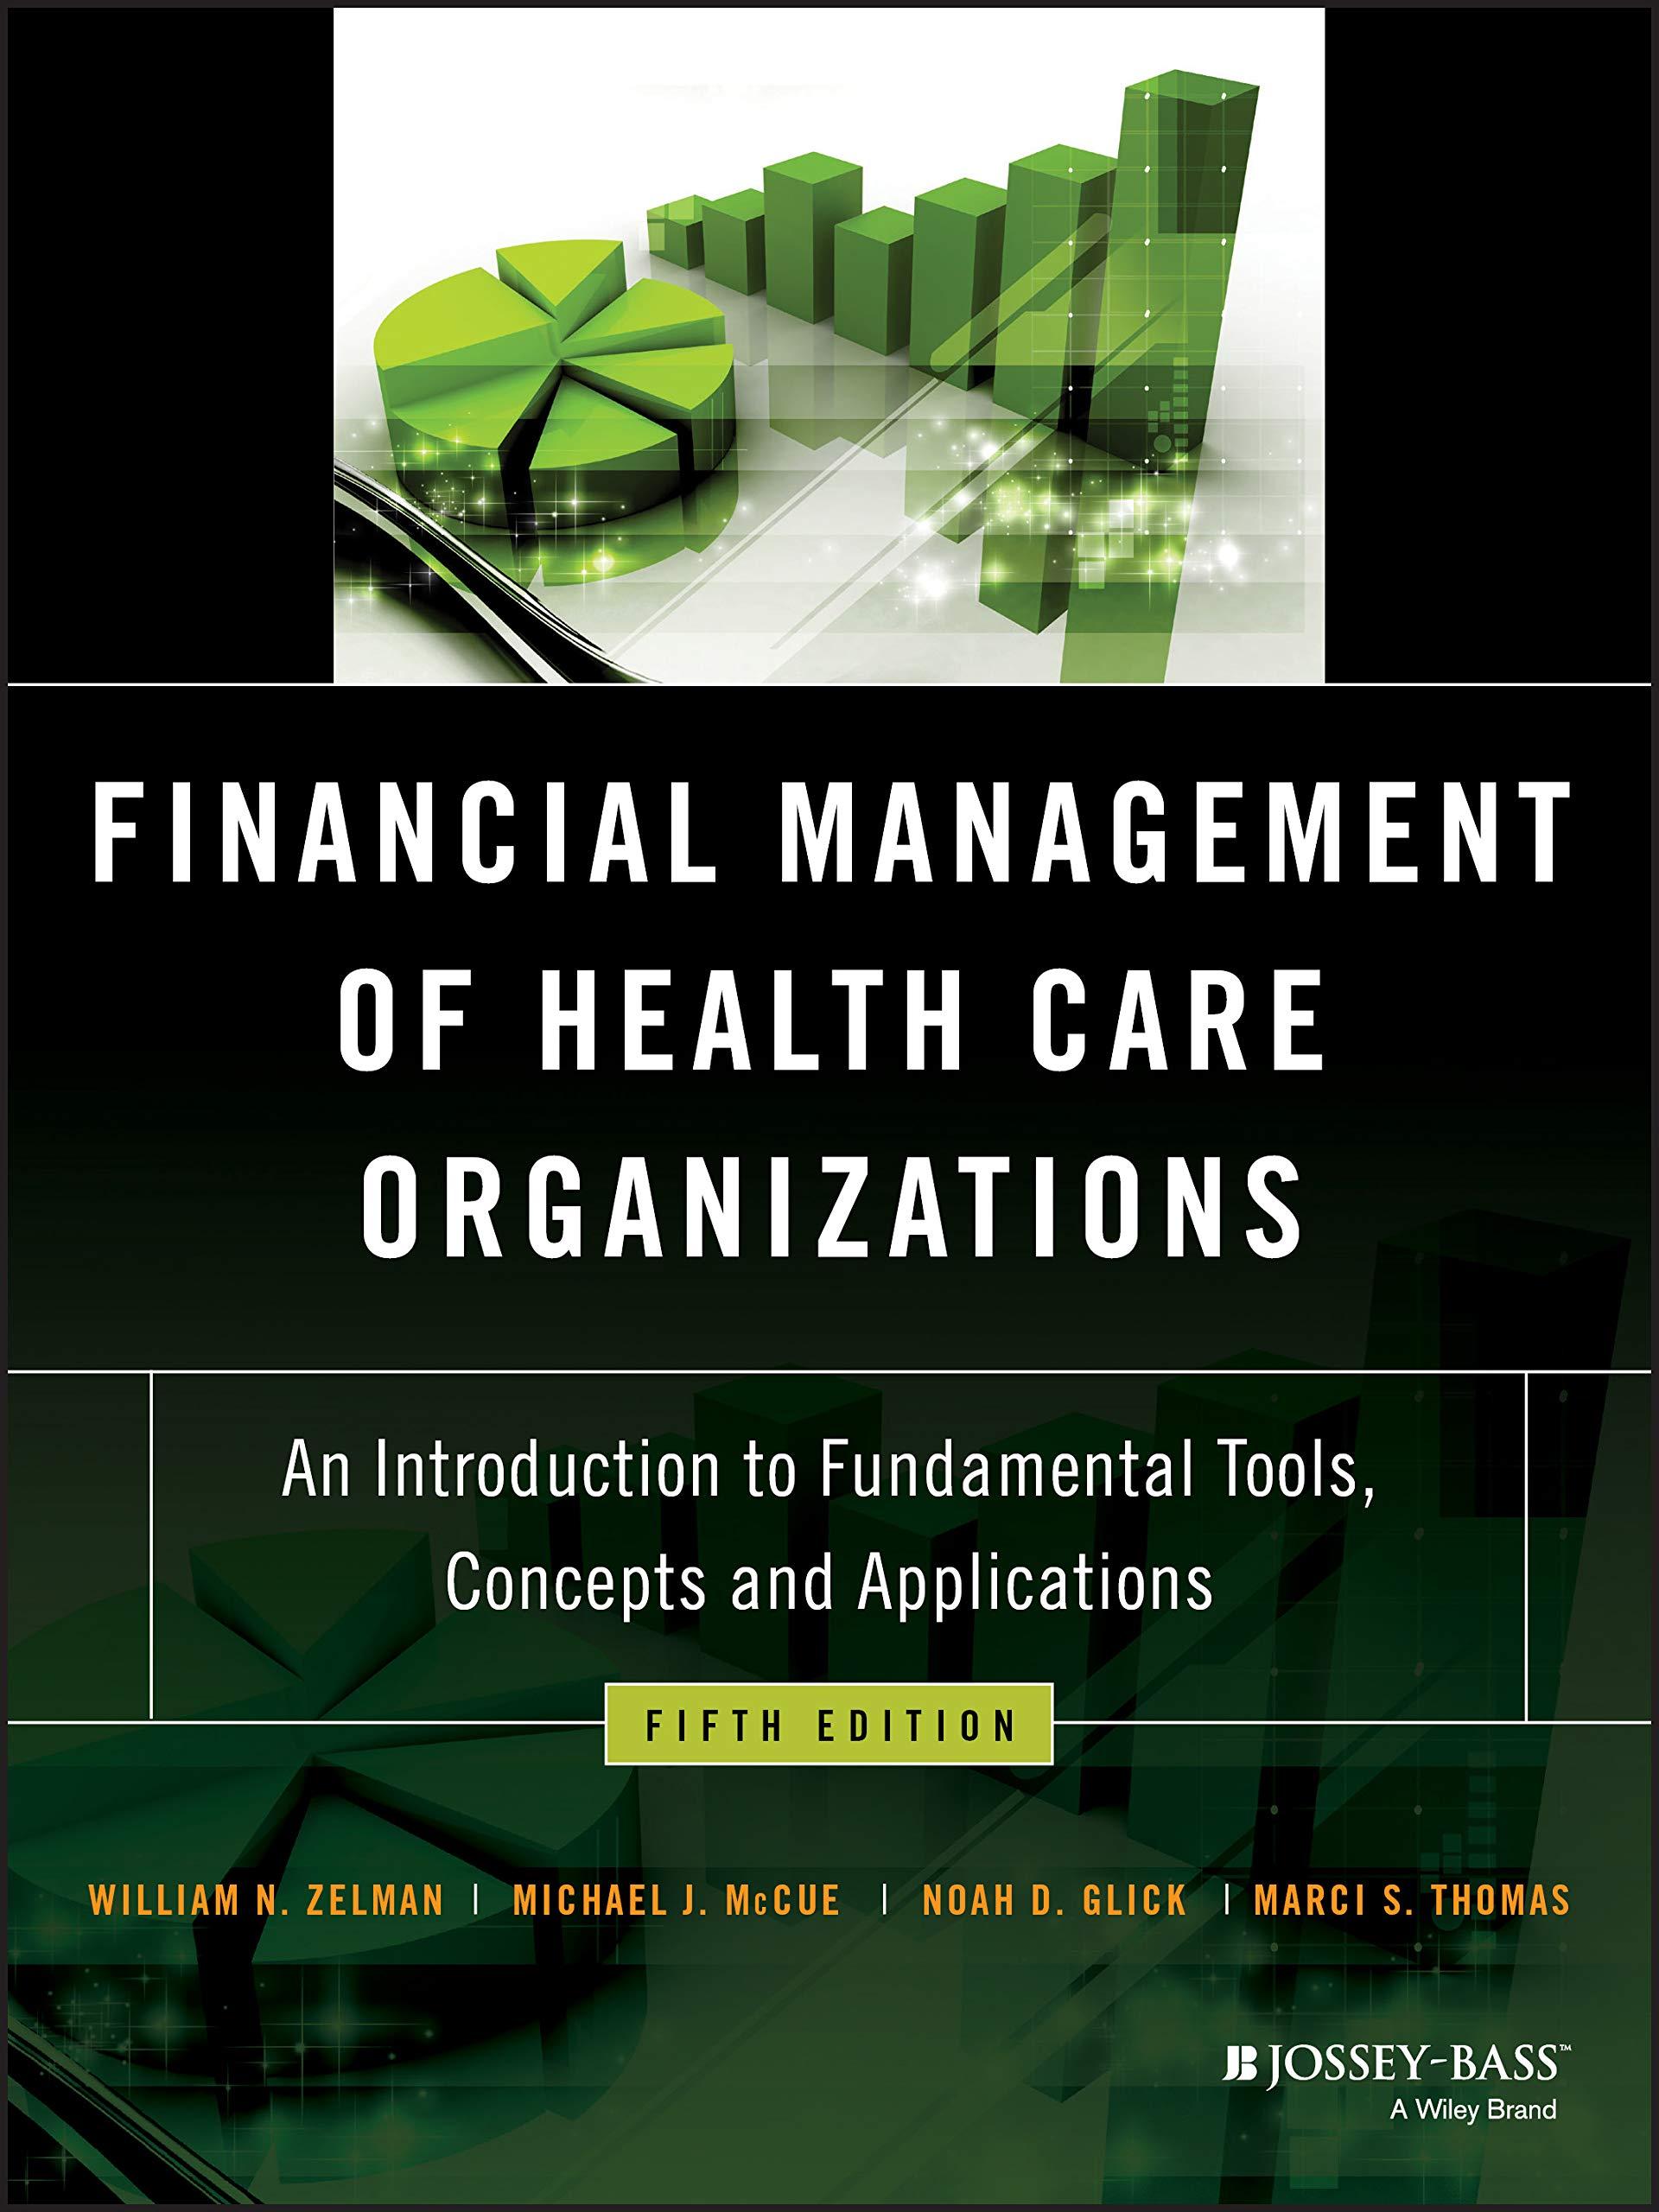 financial management of health care organizations 5th edition william n. zelman, michael j. mccue, noah d.